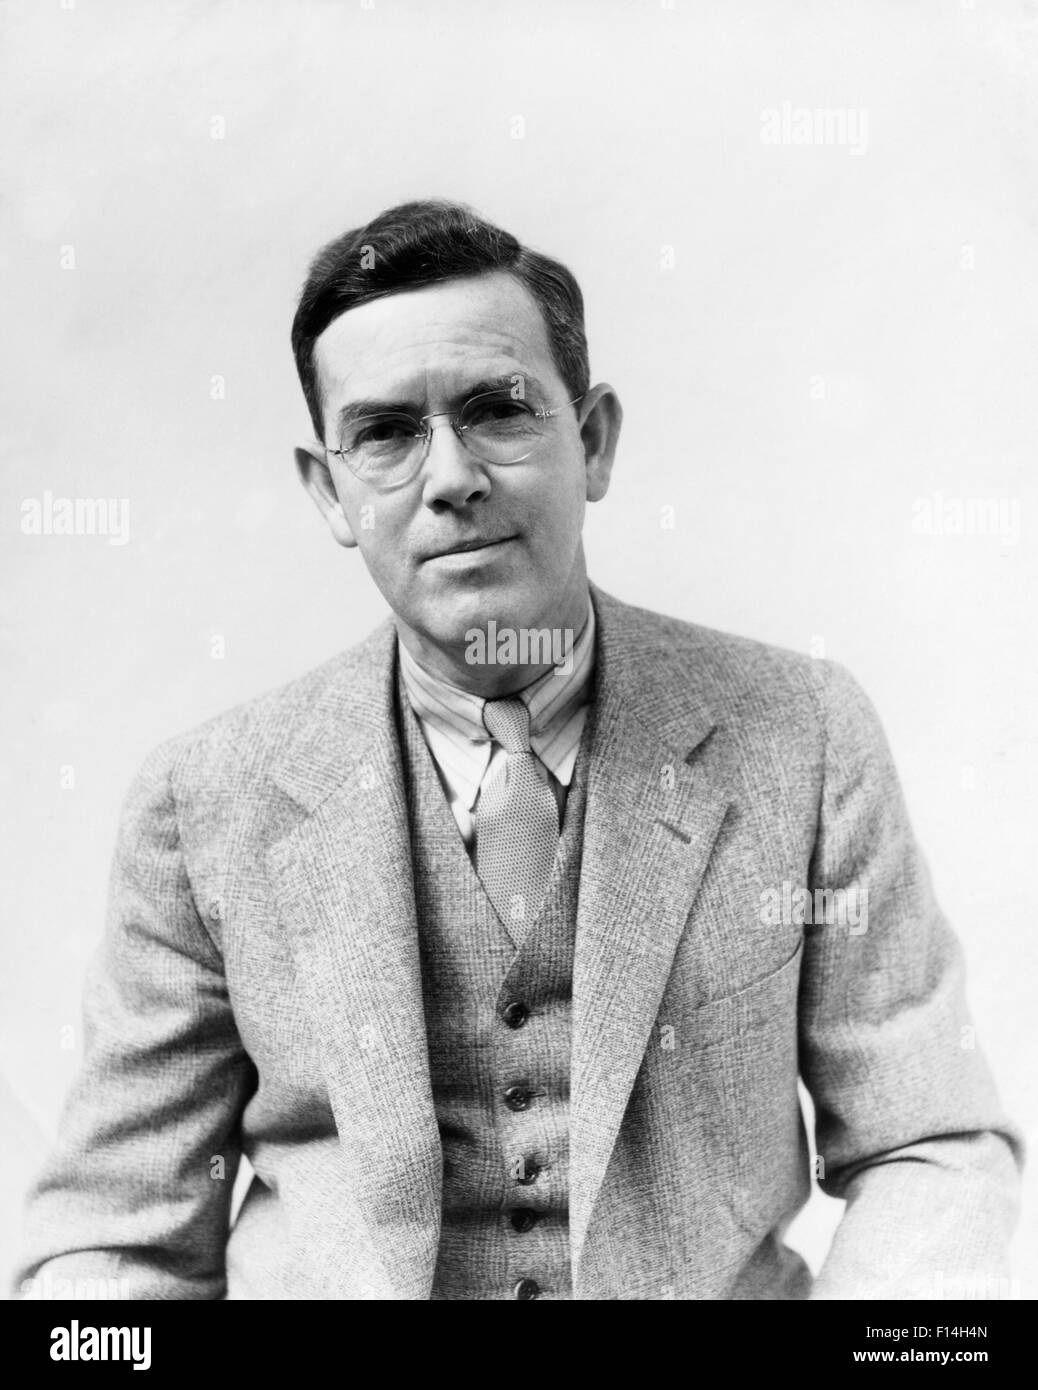 1930 PHOTOGRAPHE PORTRAIT MAN H. ARMSTRONG ROBERTS portant des lunettes gilet costume cravate LOOKING AT CAMERA Banque D'Images